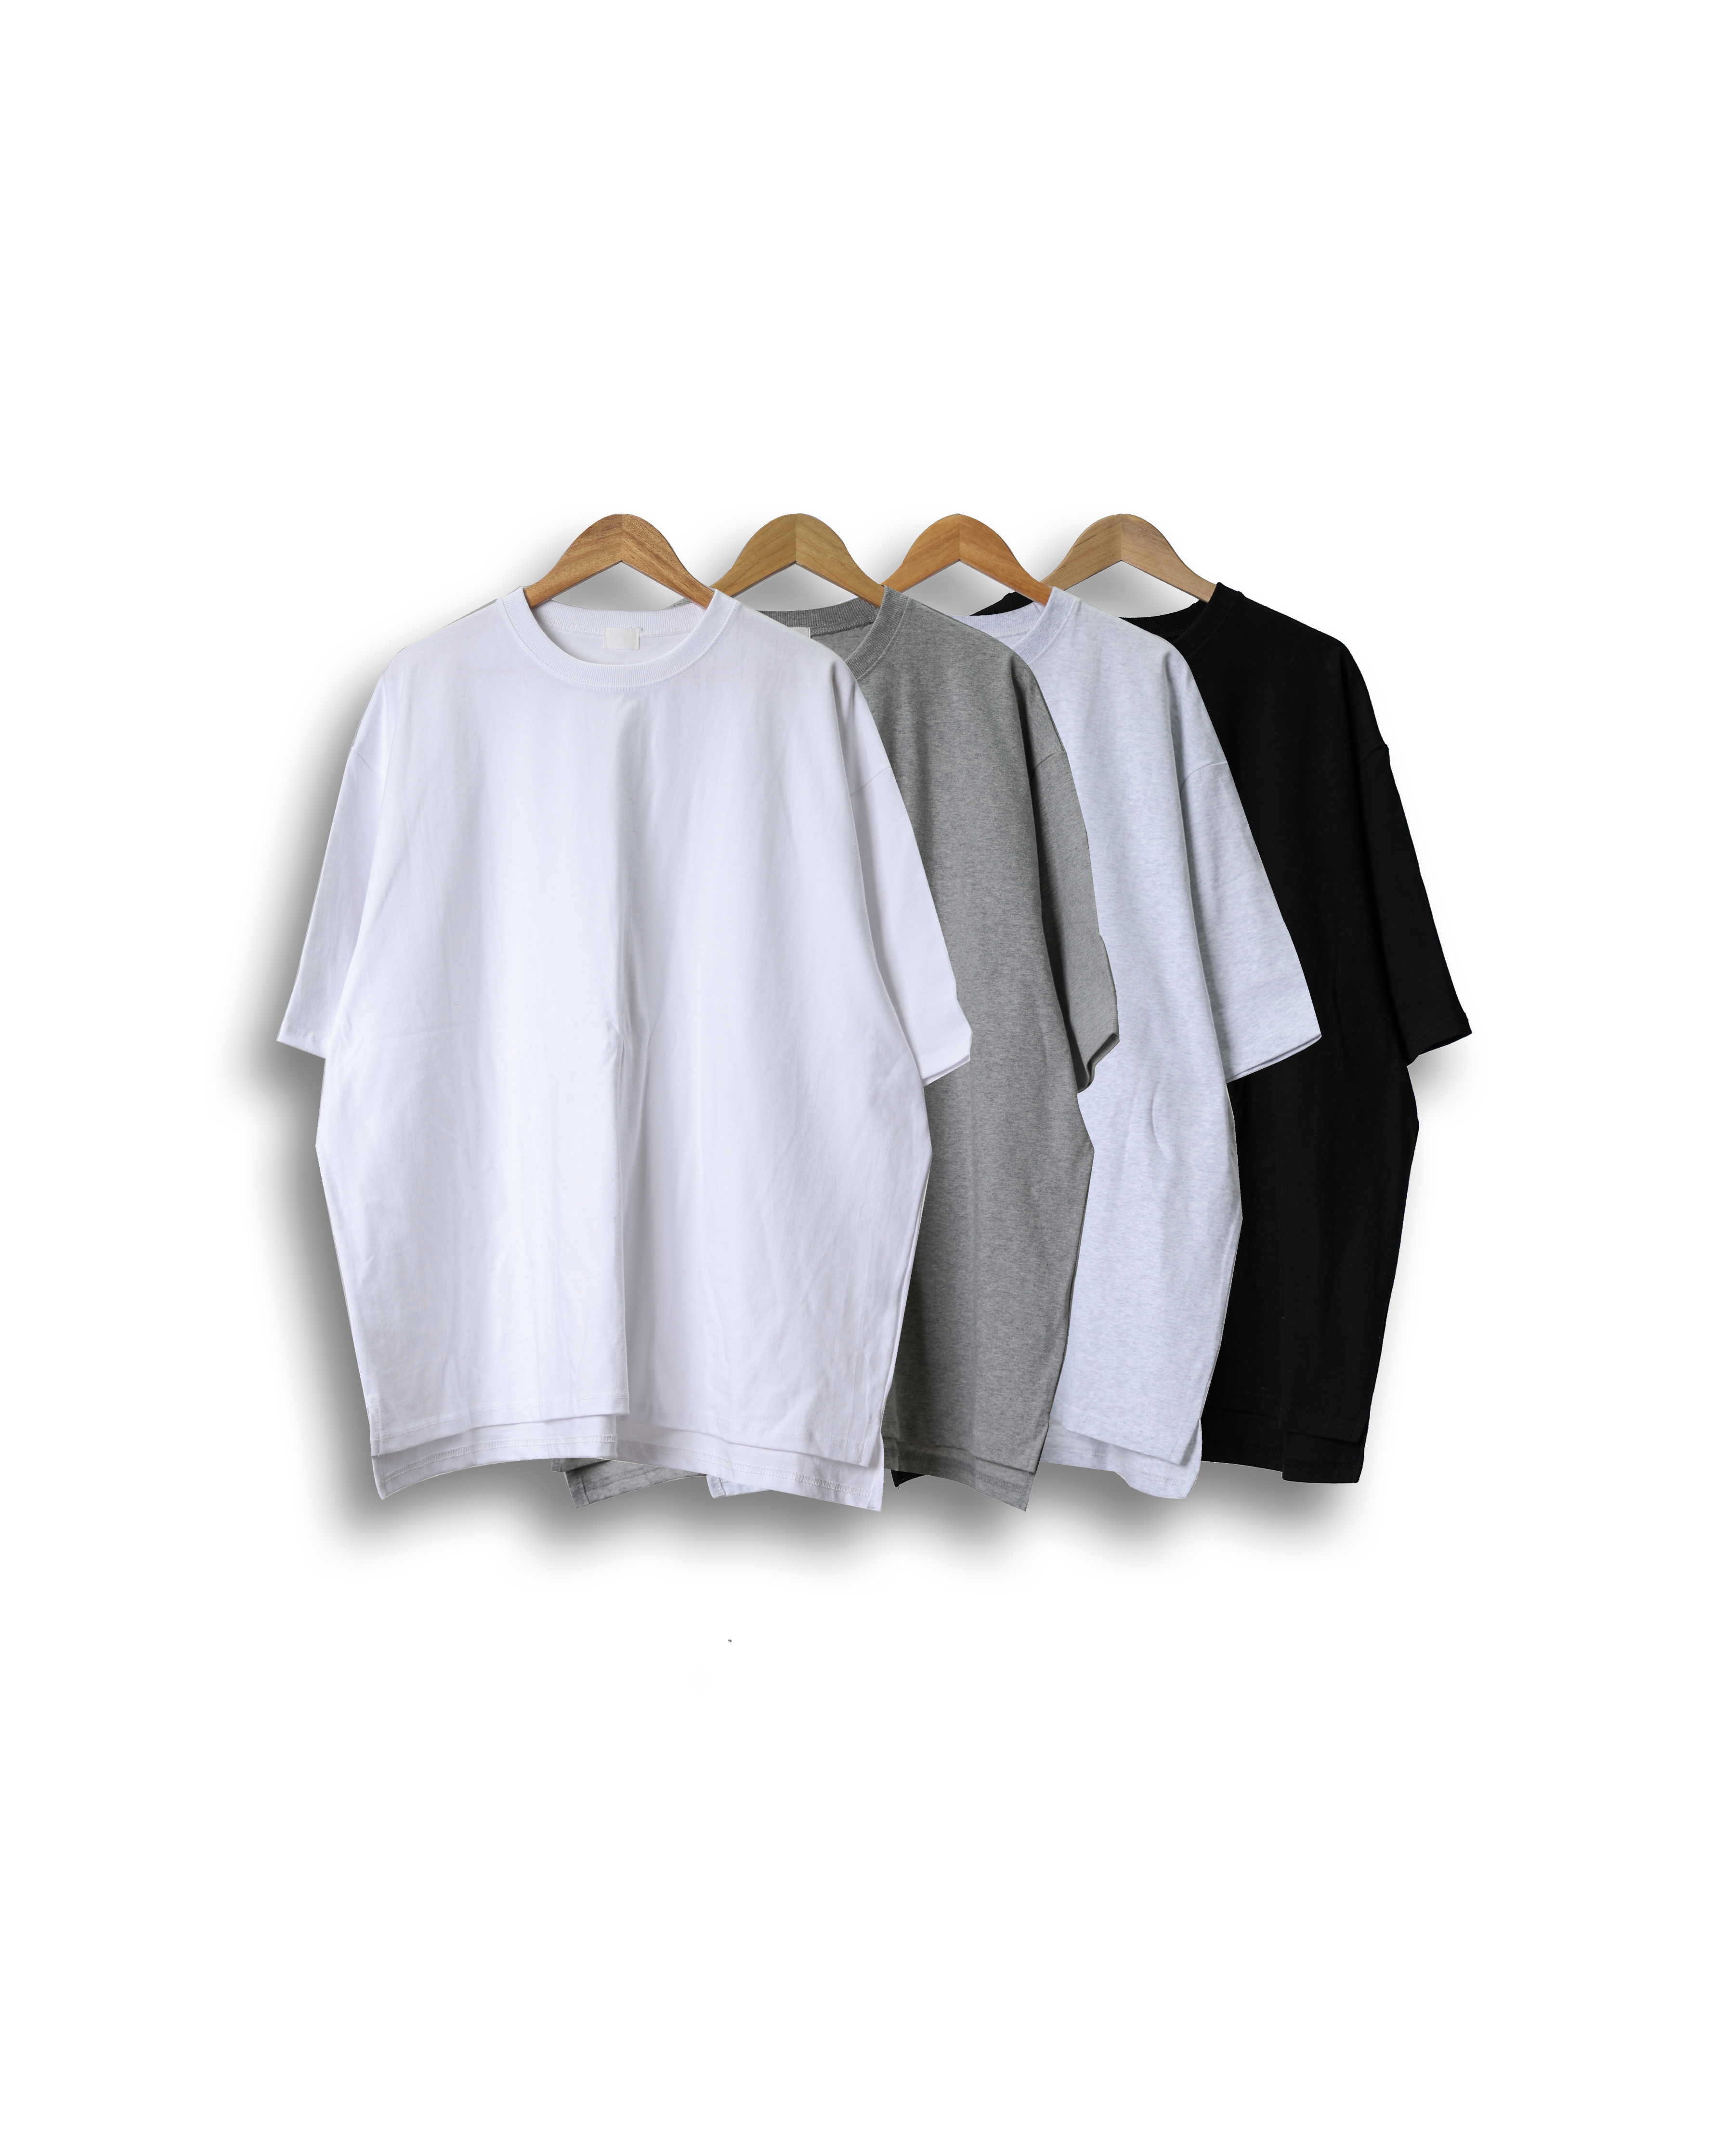 AND One Mile Maxi Sized Basic T Shirts (Black/Gray/Light Gray/White) - 8차 리오더 (5/3 배송예정)